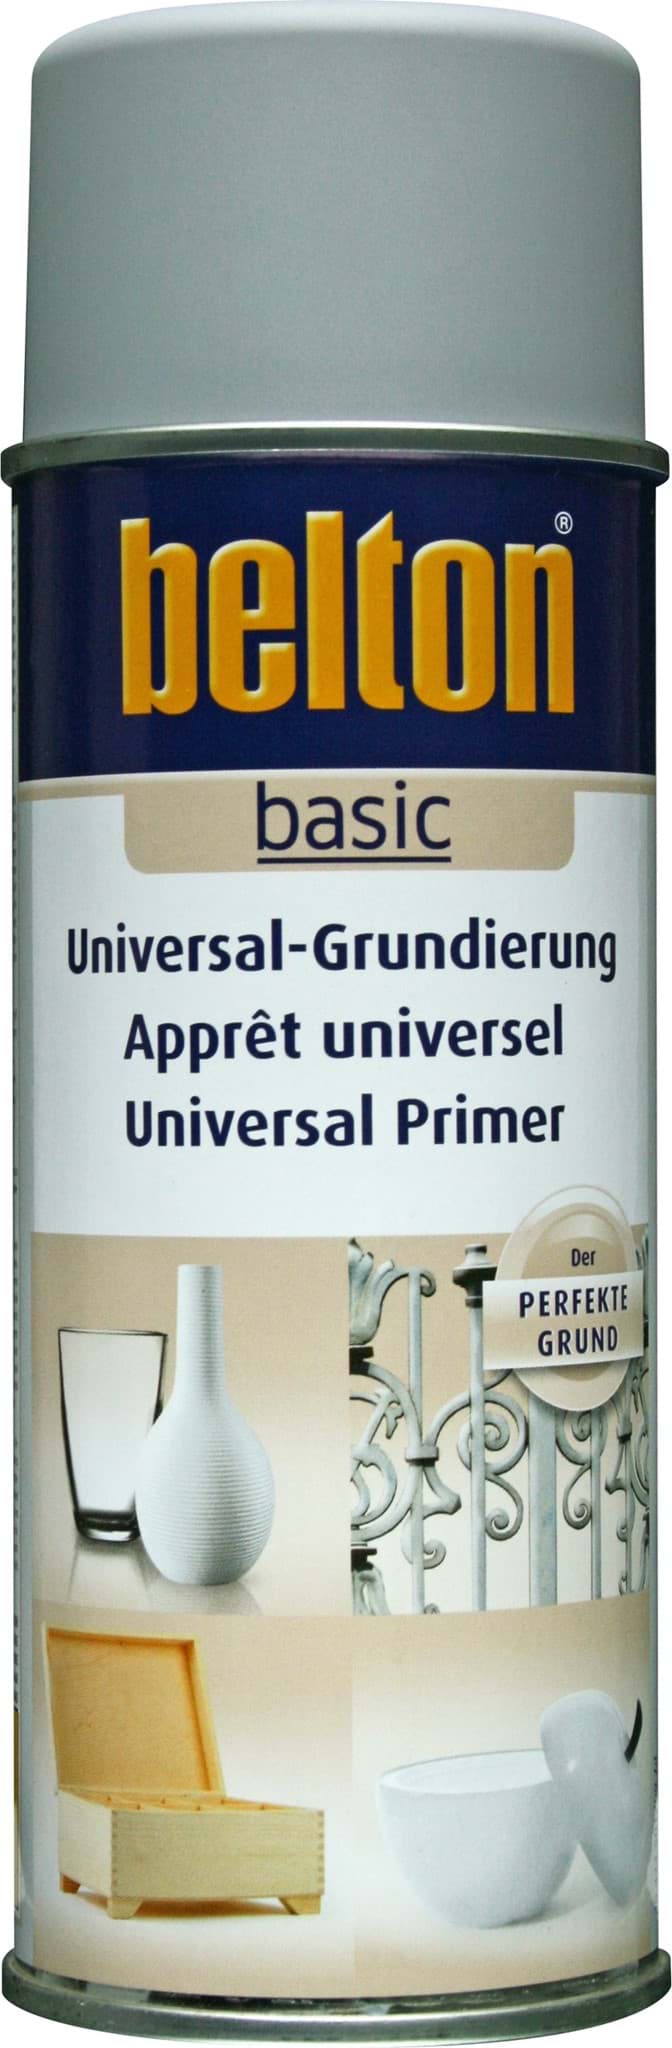 Изображение Belton basic Universal Grundierung grau